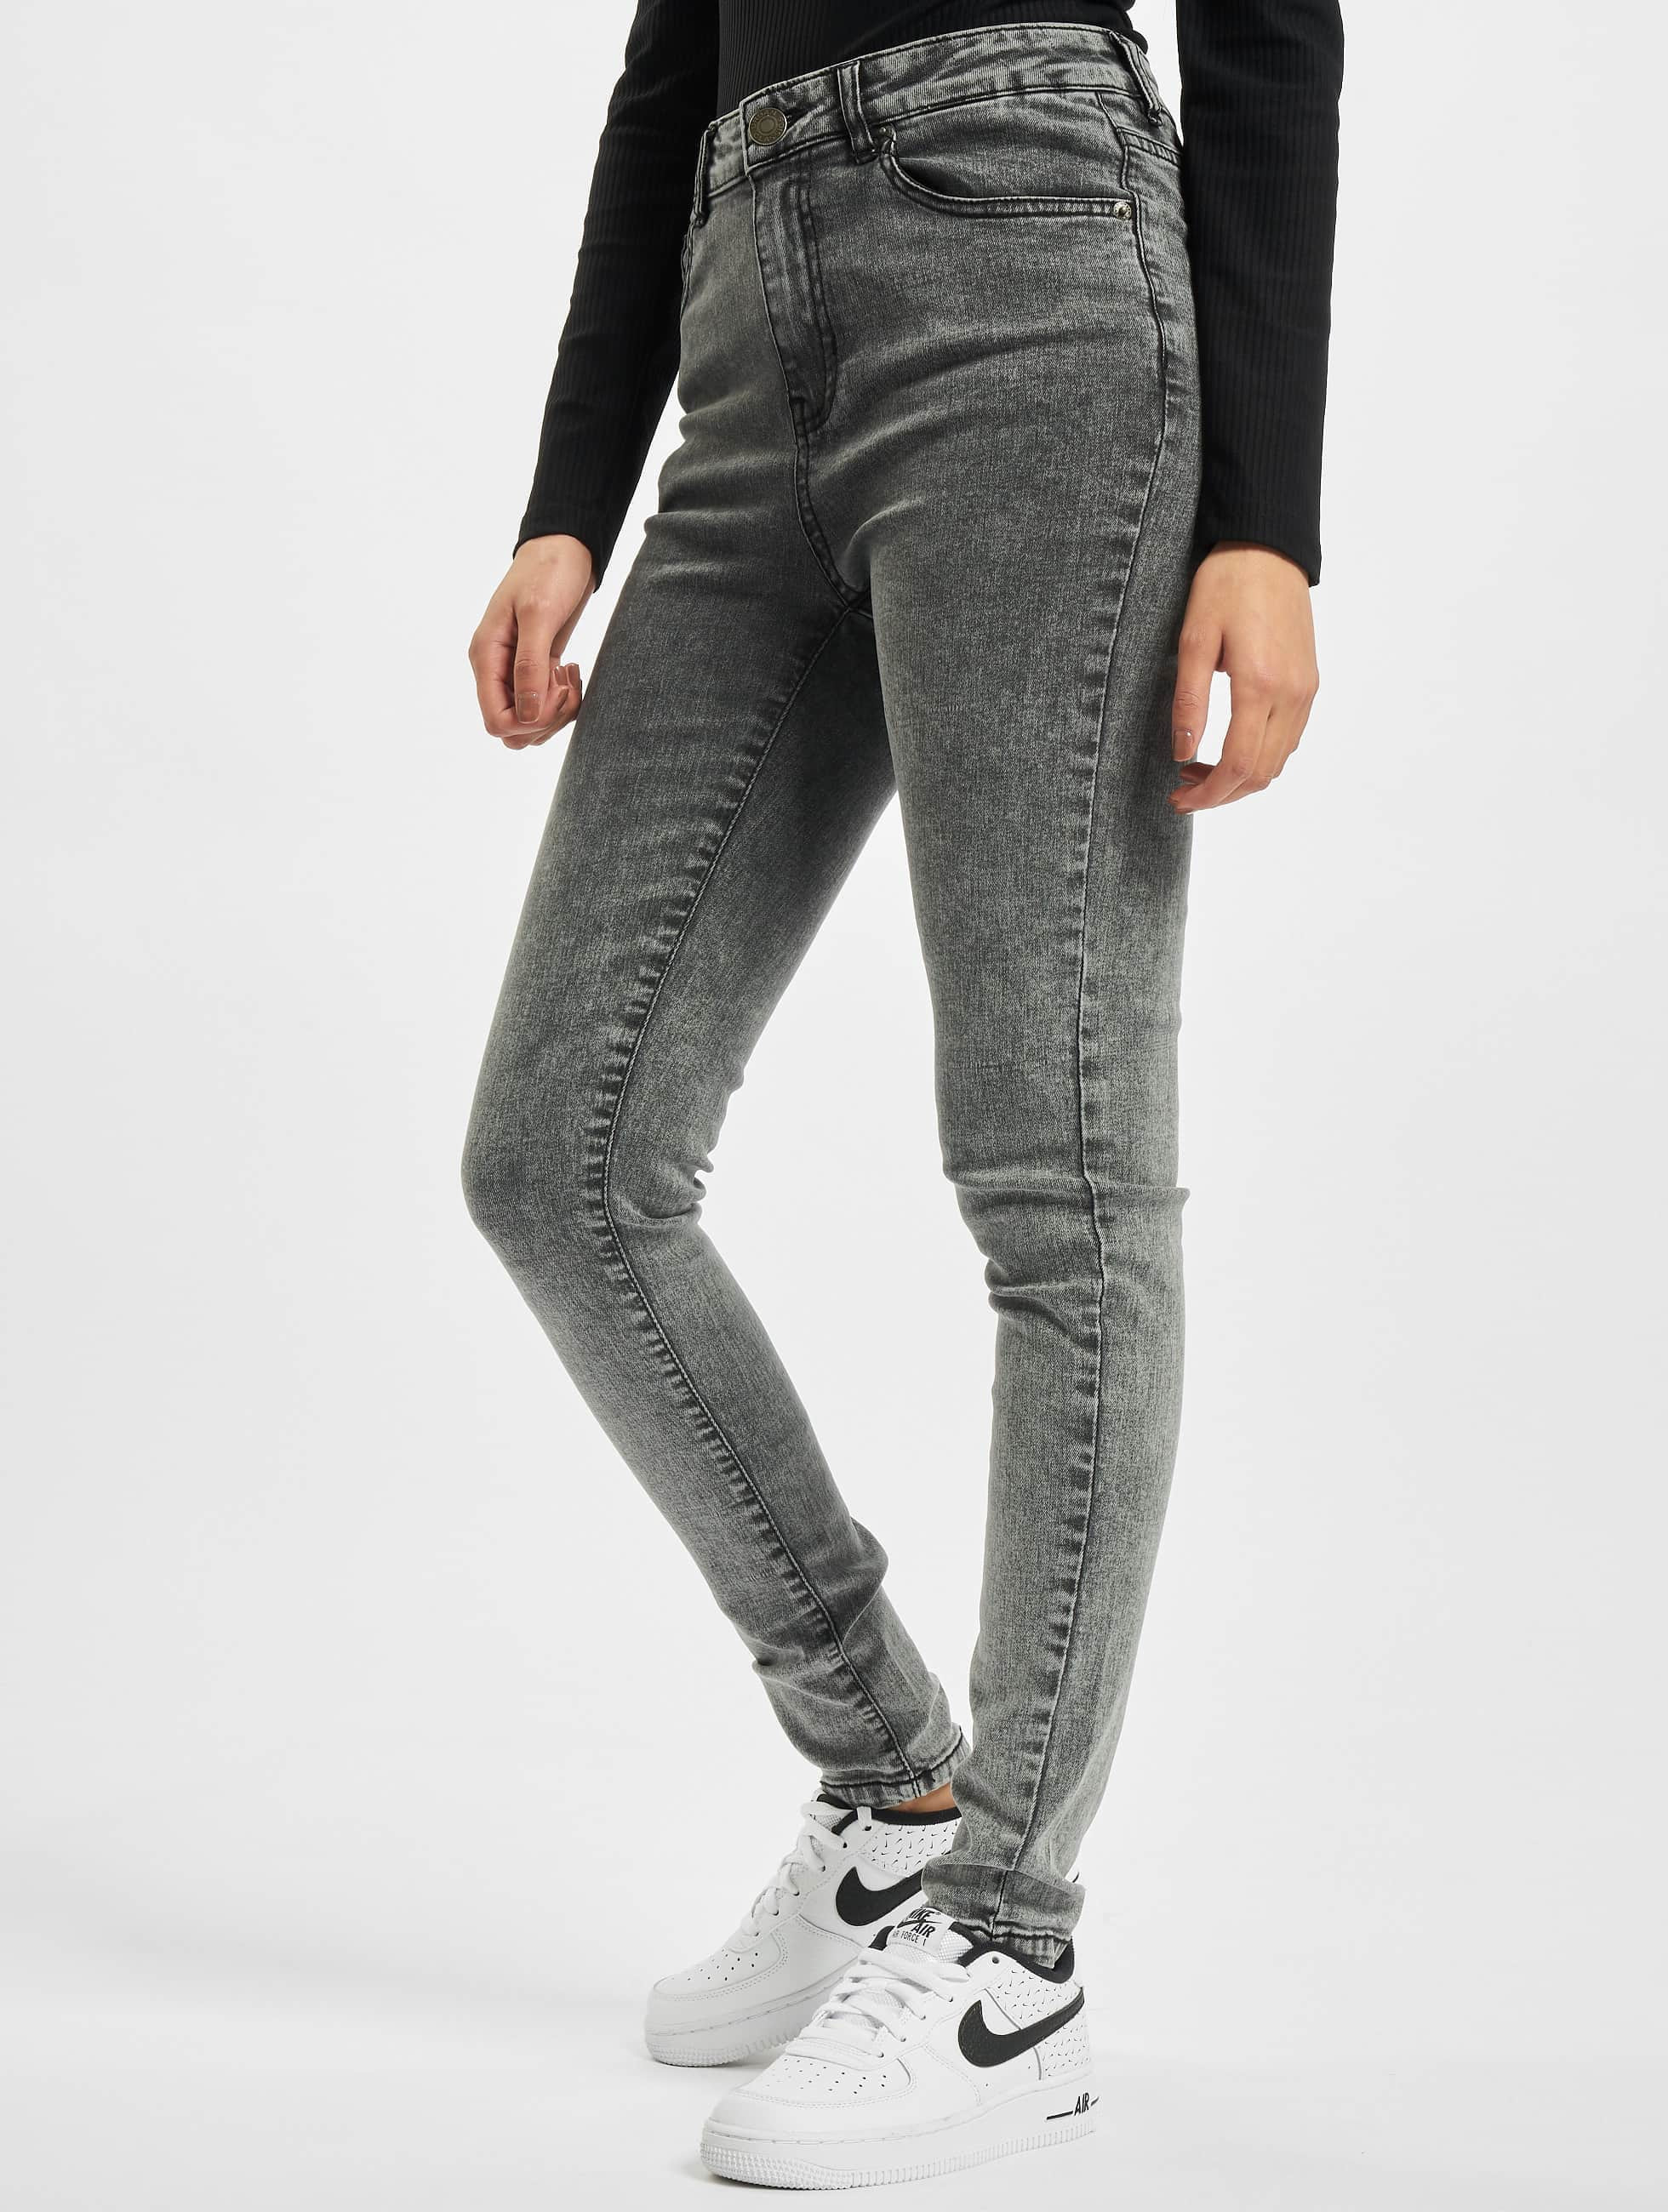 Folkeskole veltalende shabby Urban Classics Jeans / High Waisted Jeans Ladies High Waist Skinny in zwart  799370